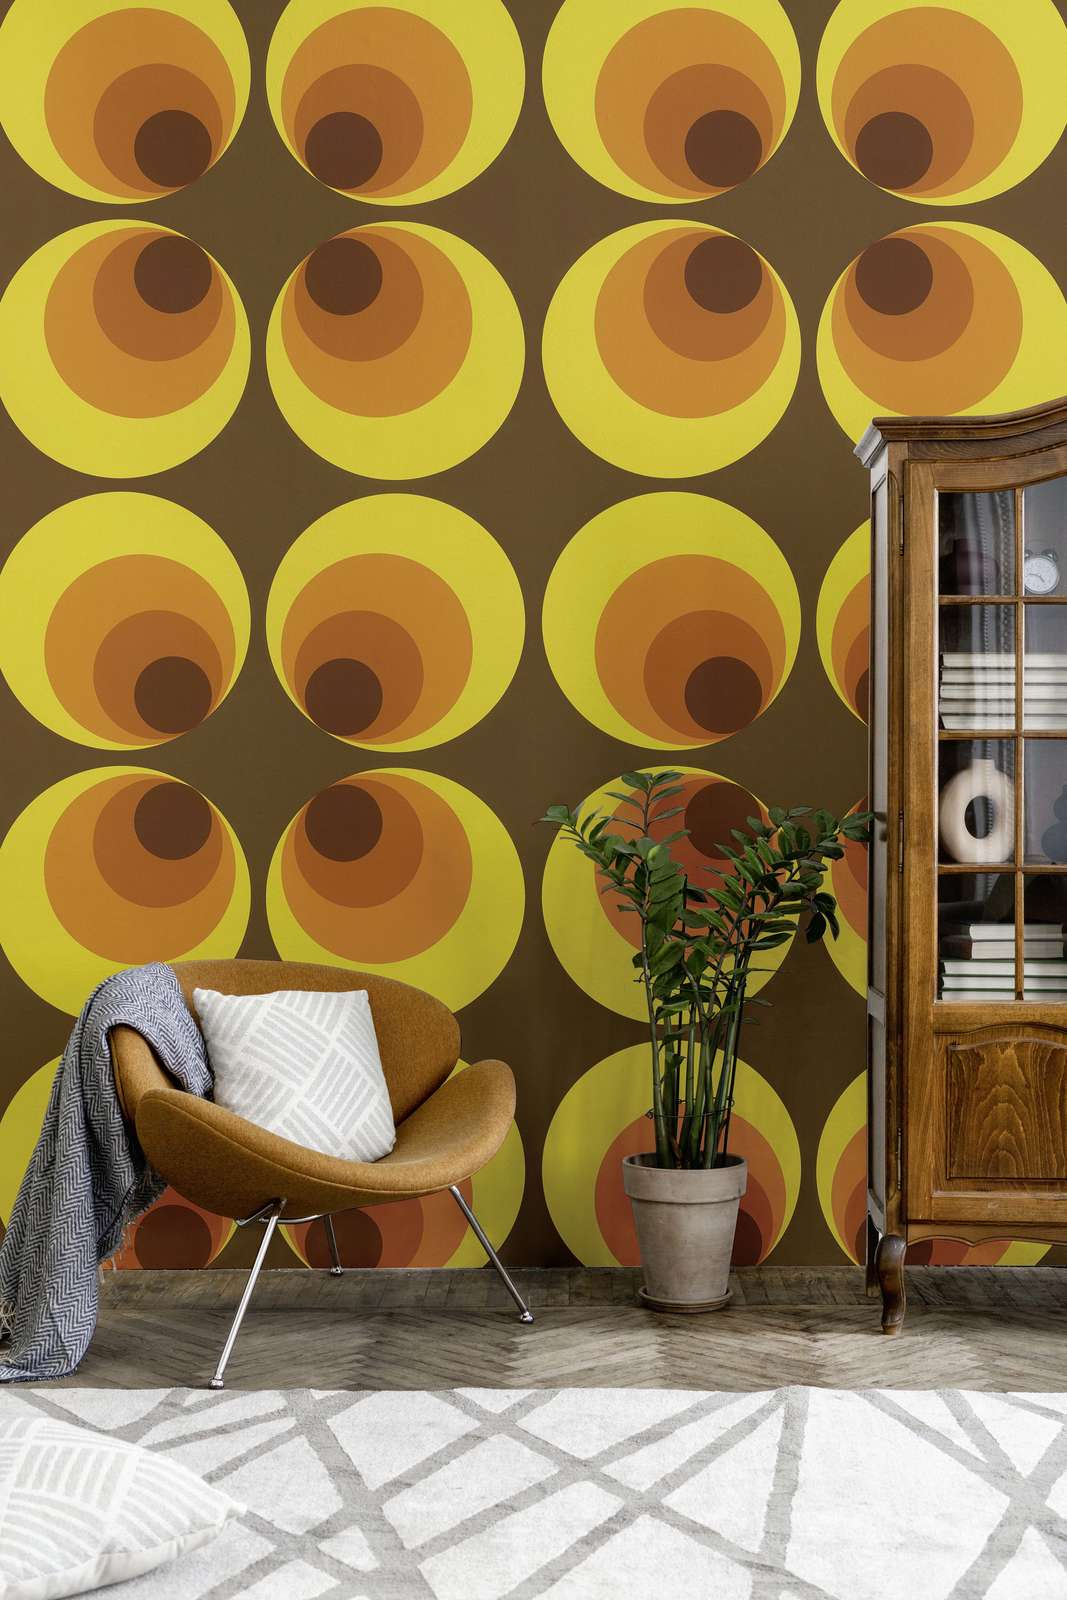             Vintage wallpaper with retro design - brown, yellow, orange
        